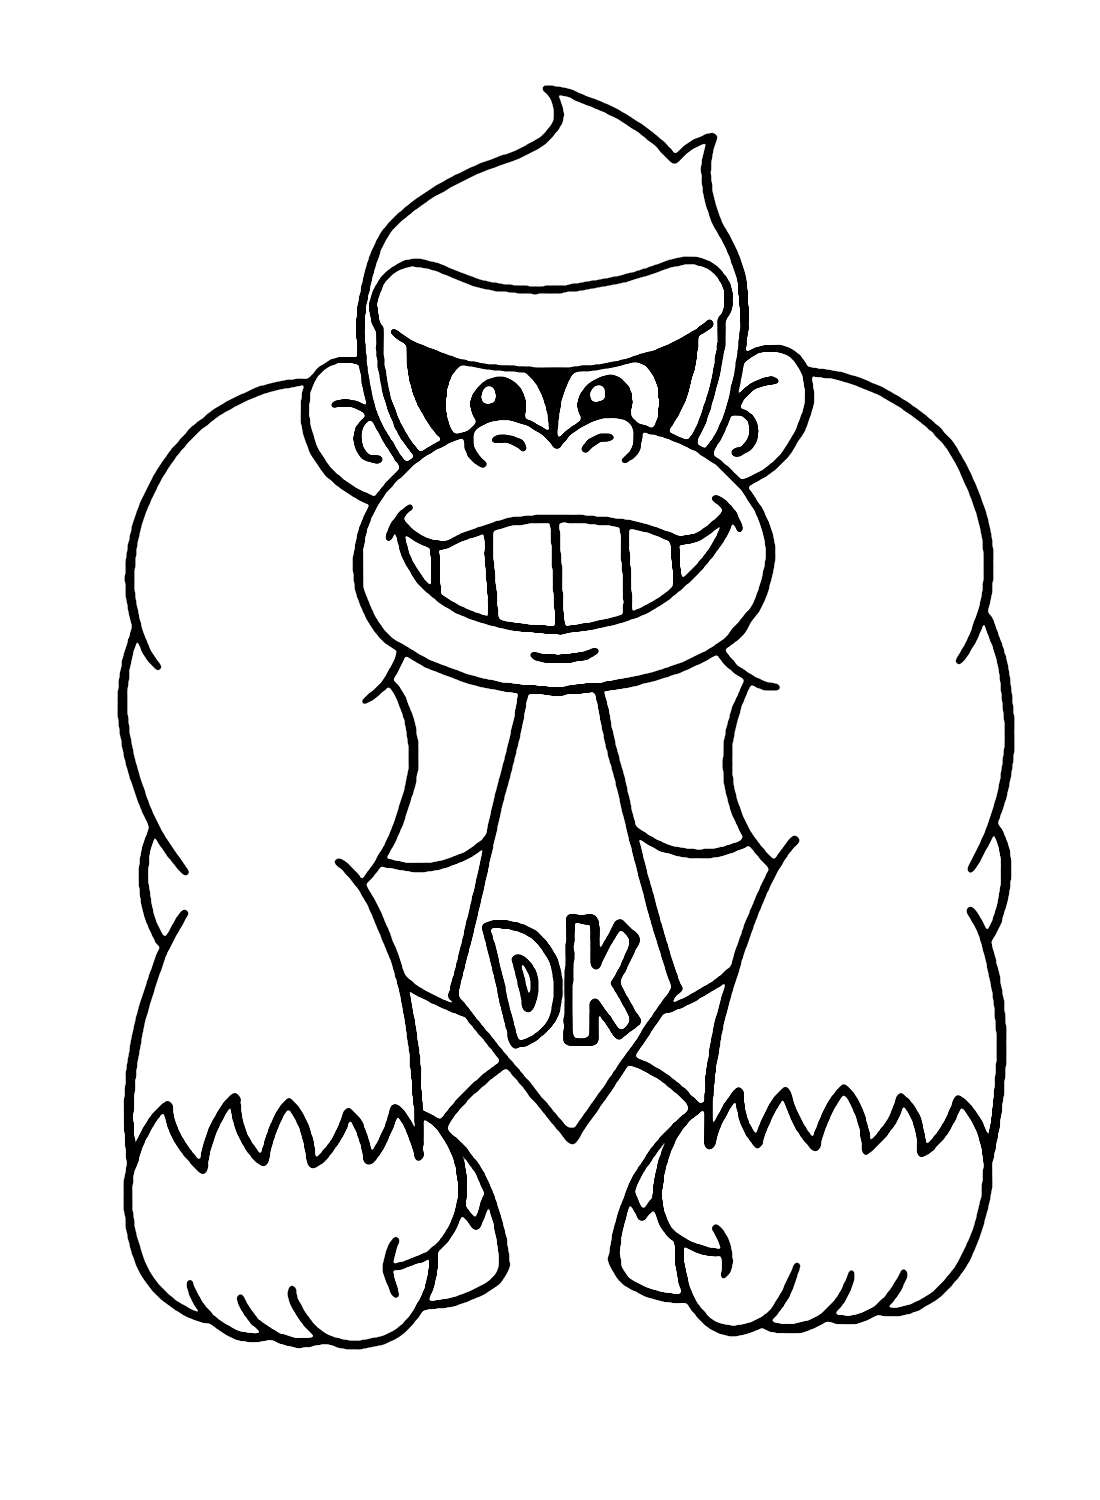 Leuke Donkey Kong van Donkey Kong